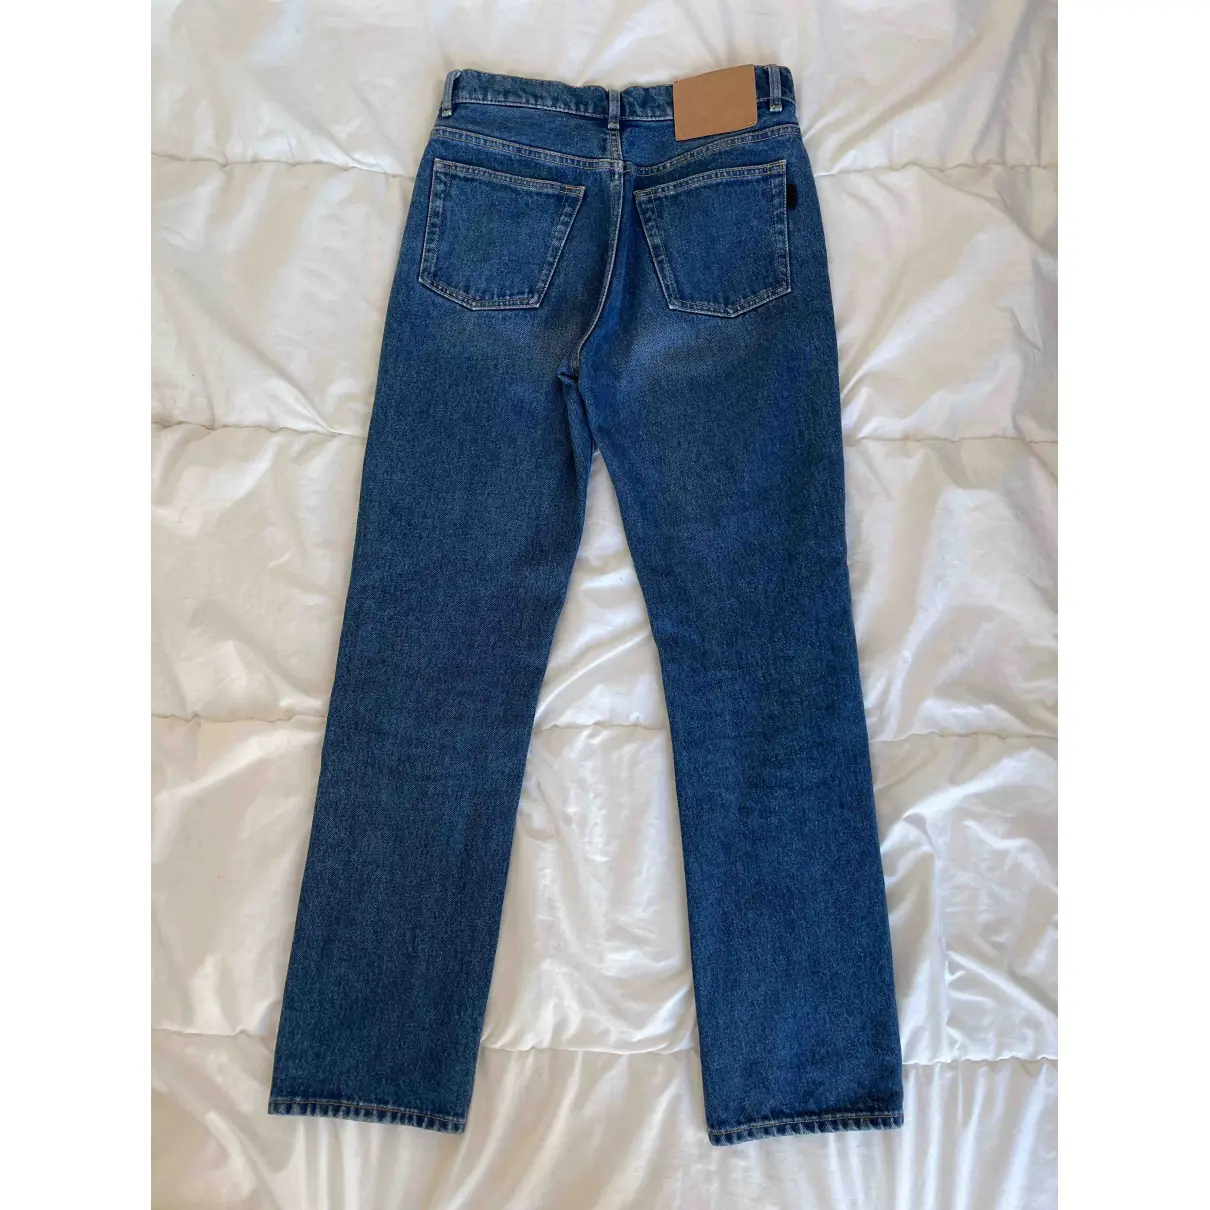 Buy Balenciaga Jeans online